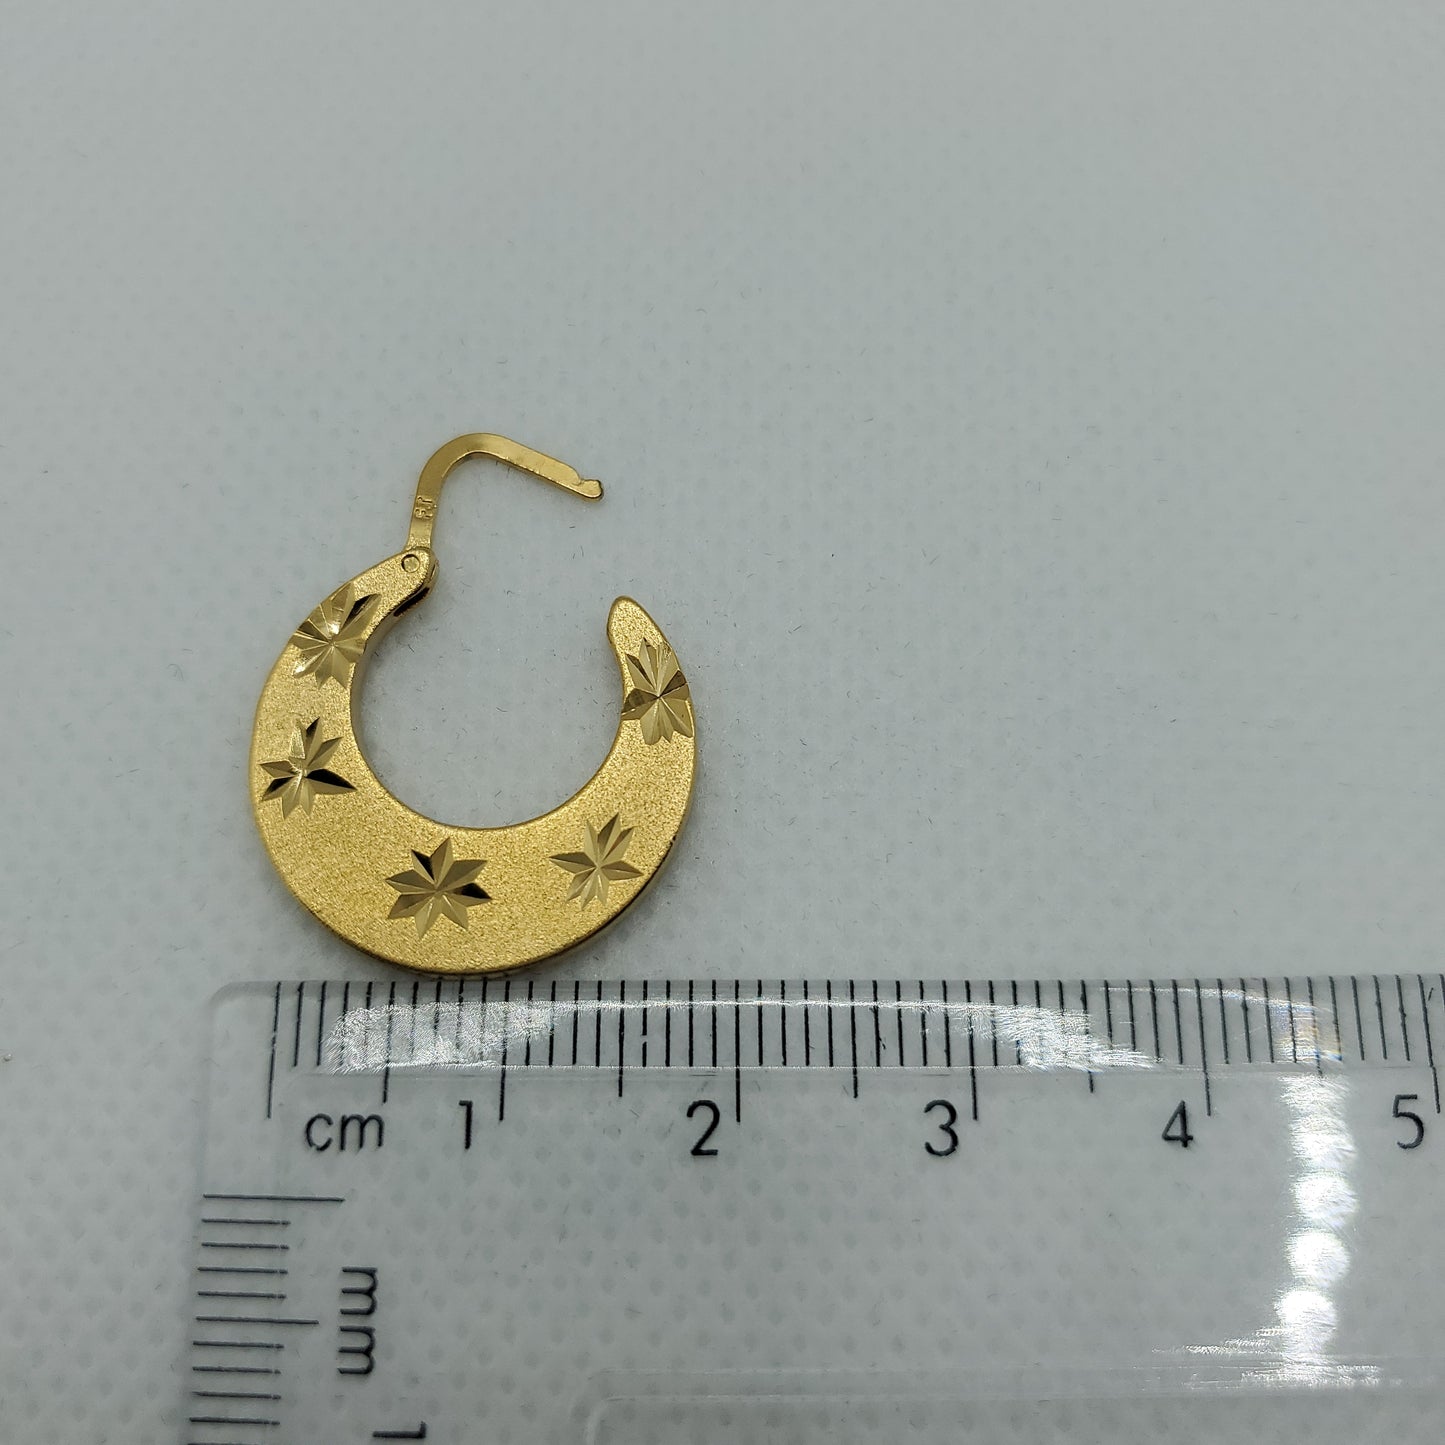 18k Gold Plated Easy Wear Nattiyan Earrings